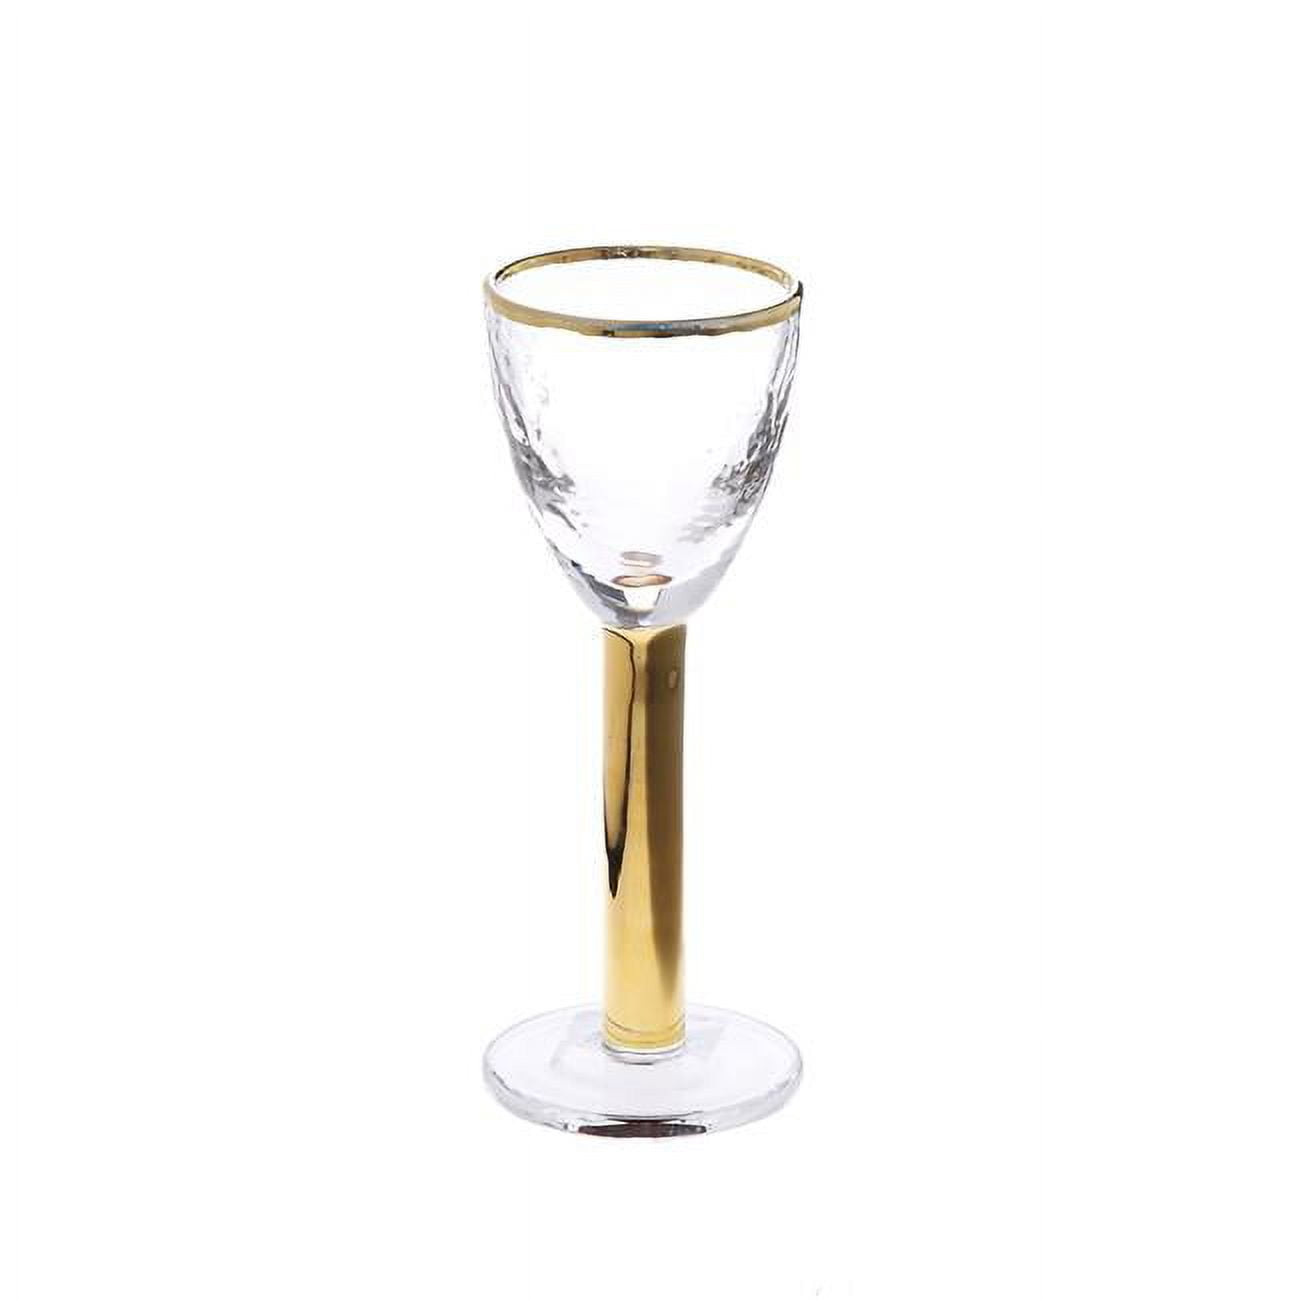 Classic Touch Glg1053 Stemmed Liquor Glasses With Gold Stem & Rim, Set Of 6